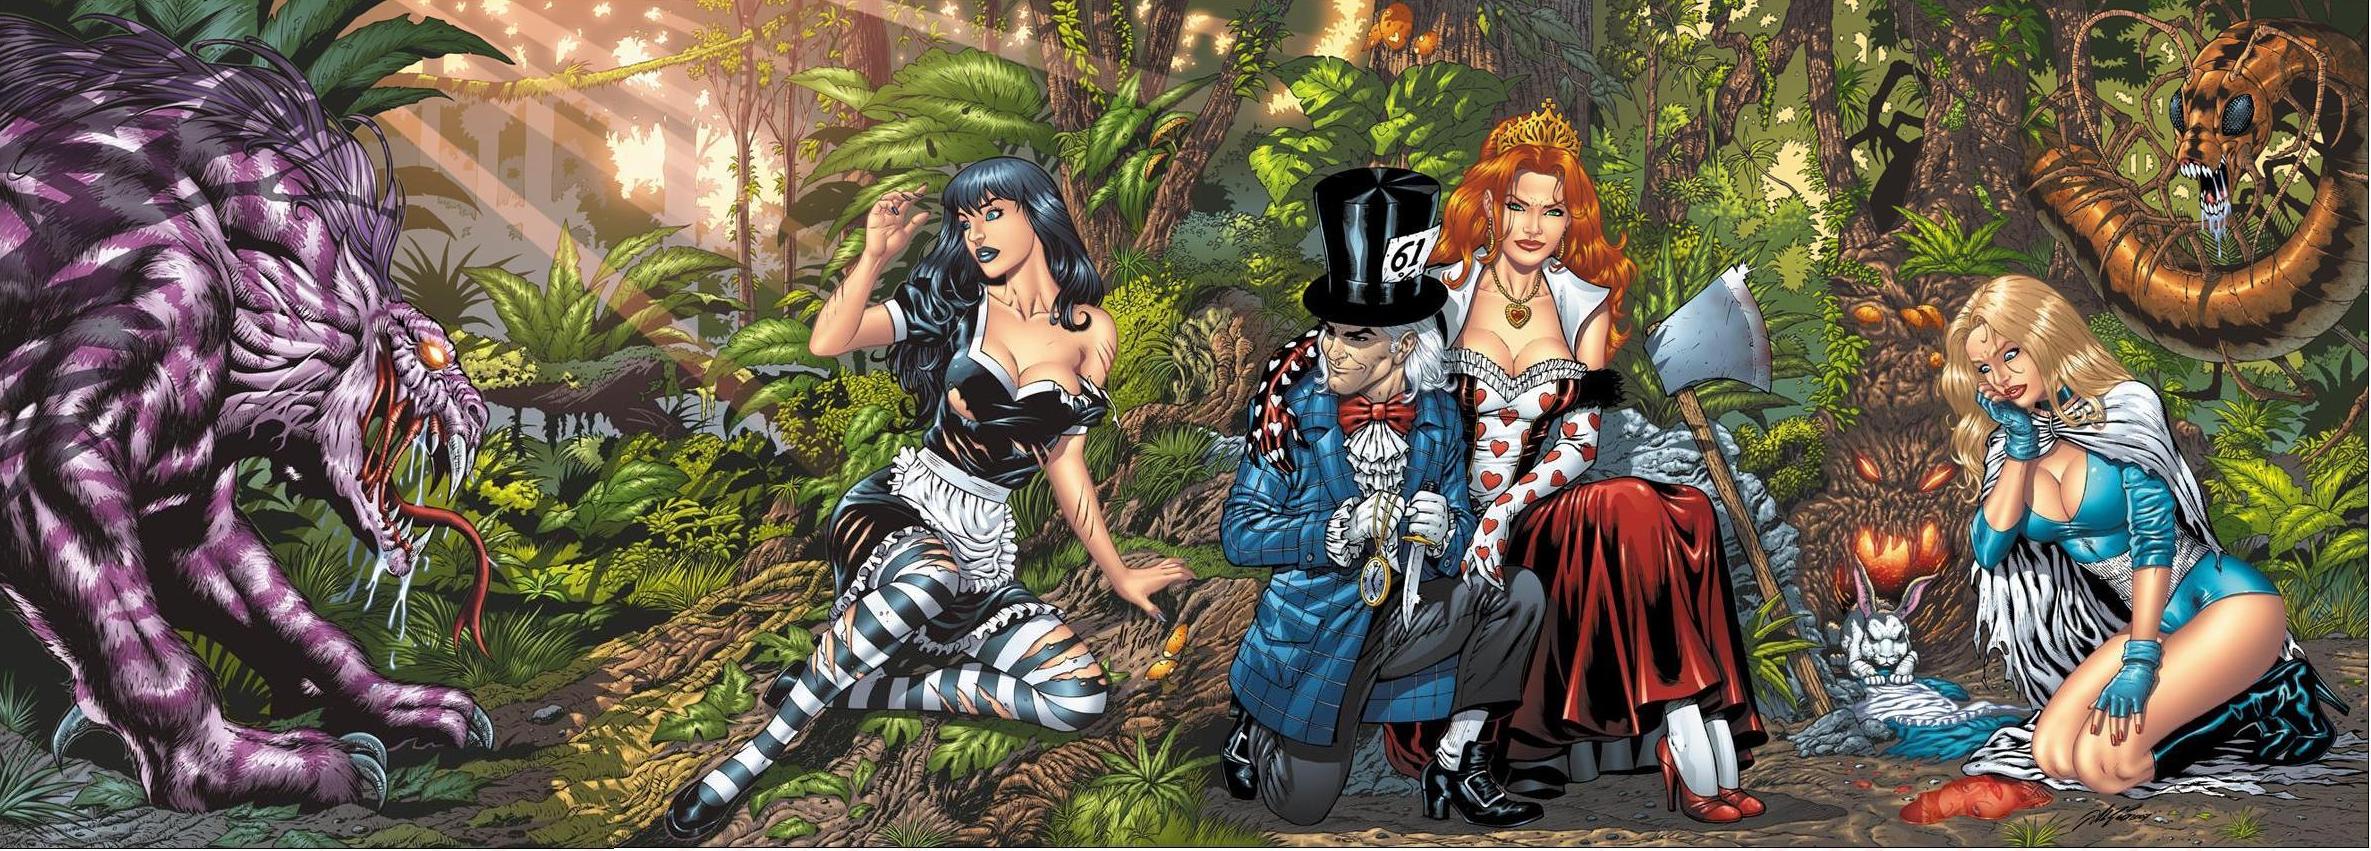 Grimm Fairy Tales: Alice In Wonderland HD wallpapers, Desktop wallpaper - most viewed